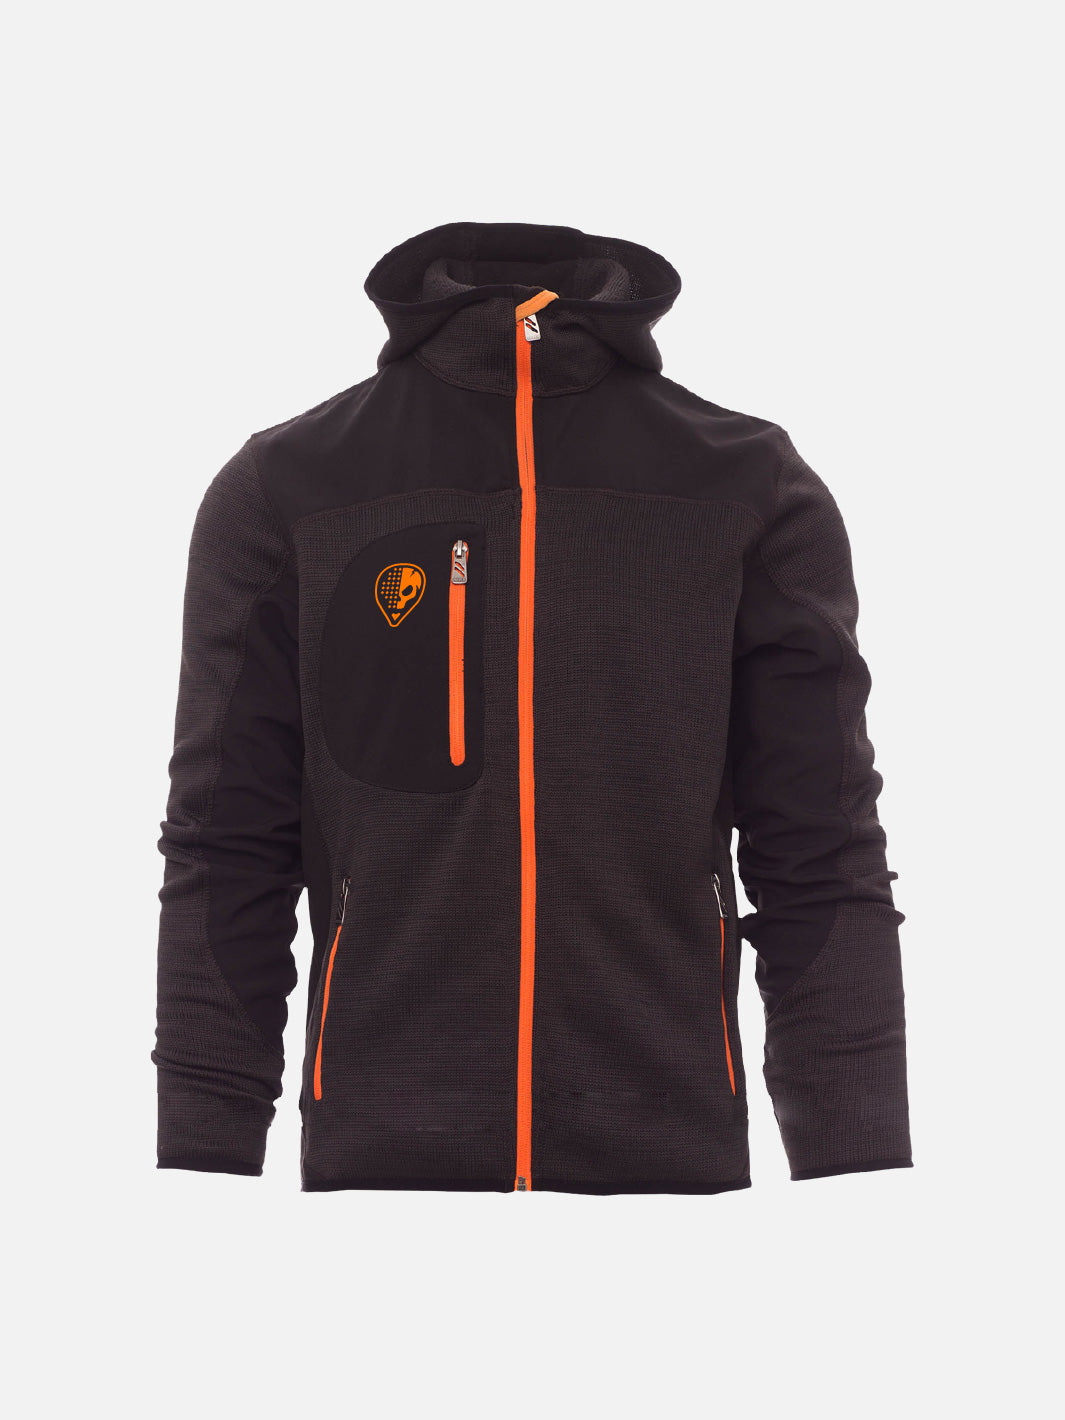 Men's Tech Jacket - Black/Orange